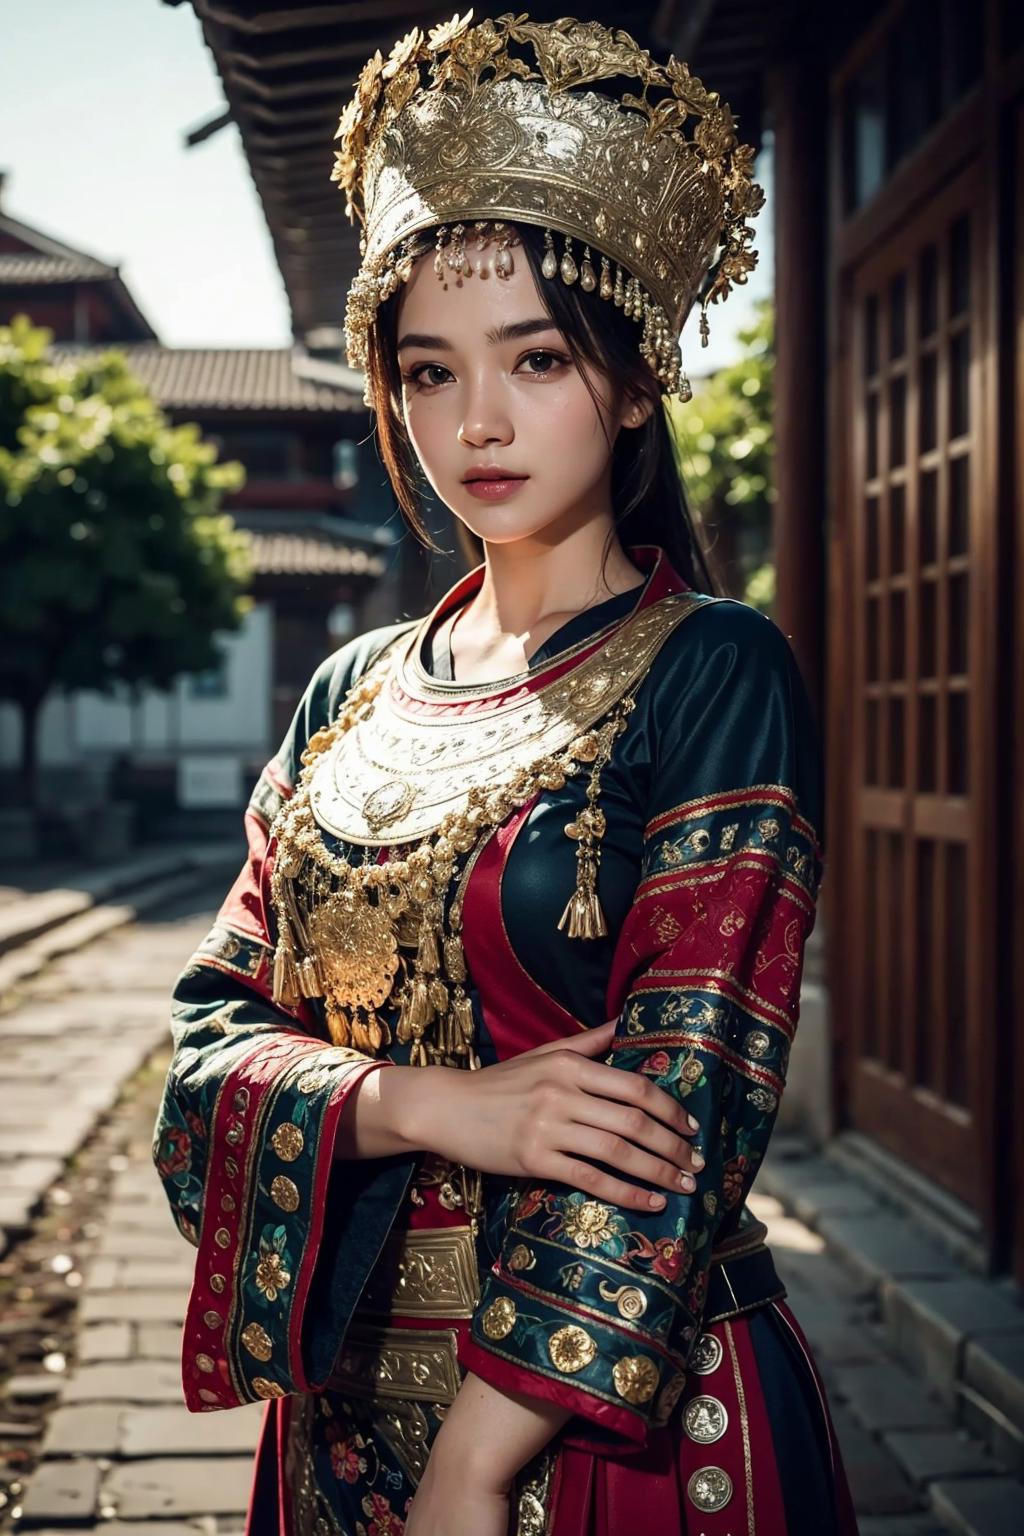 苗族服装 | Hmong costume image by kiemhon03sd280